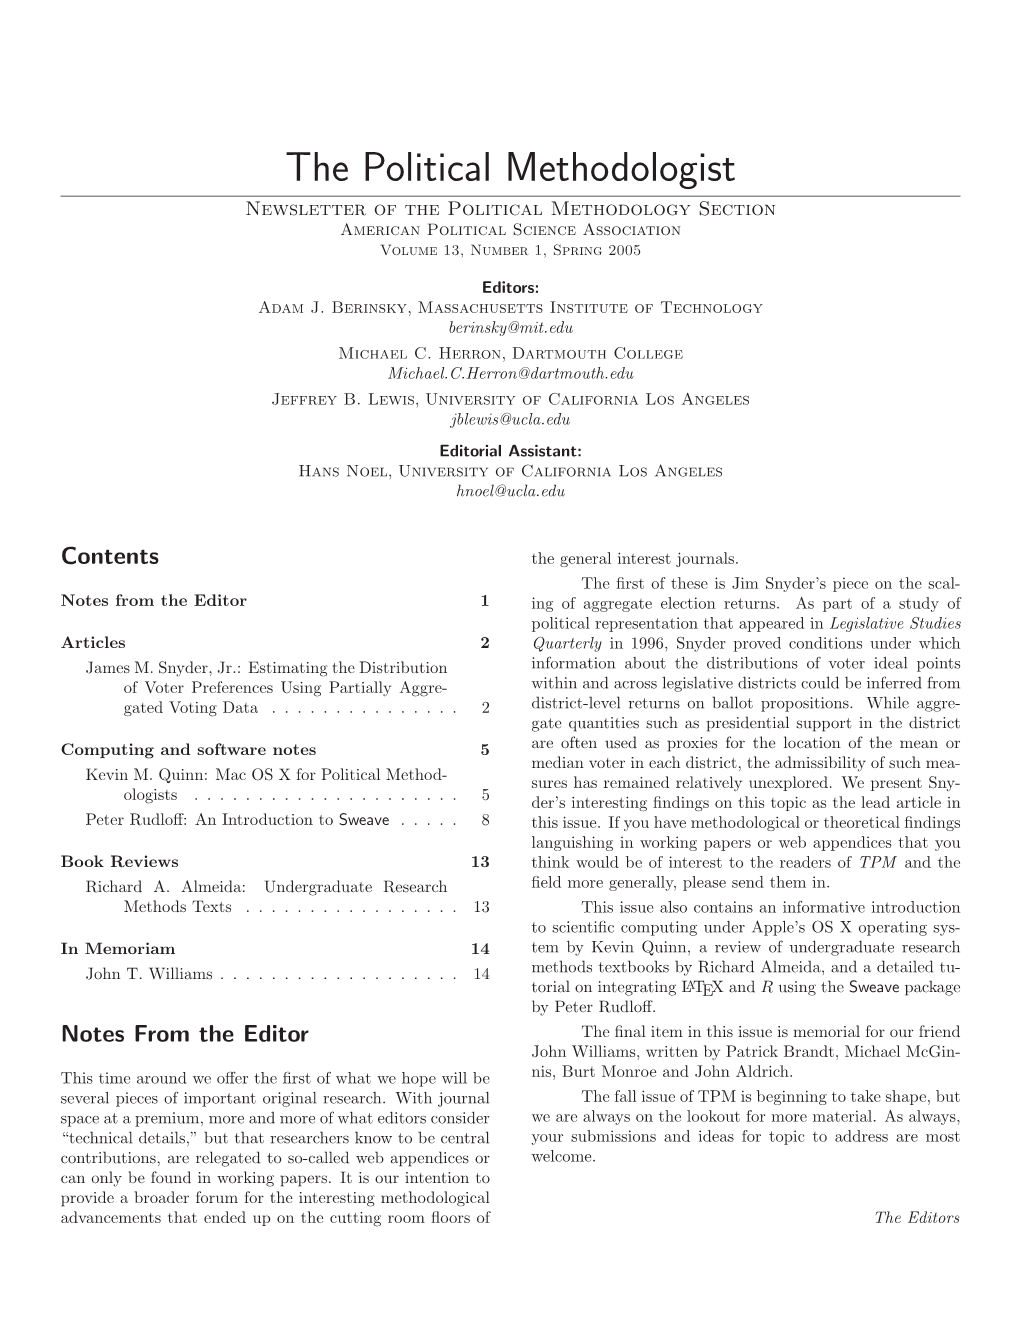 The Political Methodologist Newsletter of the Political Methodology Section American Political Science Association Volume 13, Number 1, Spring 2005